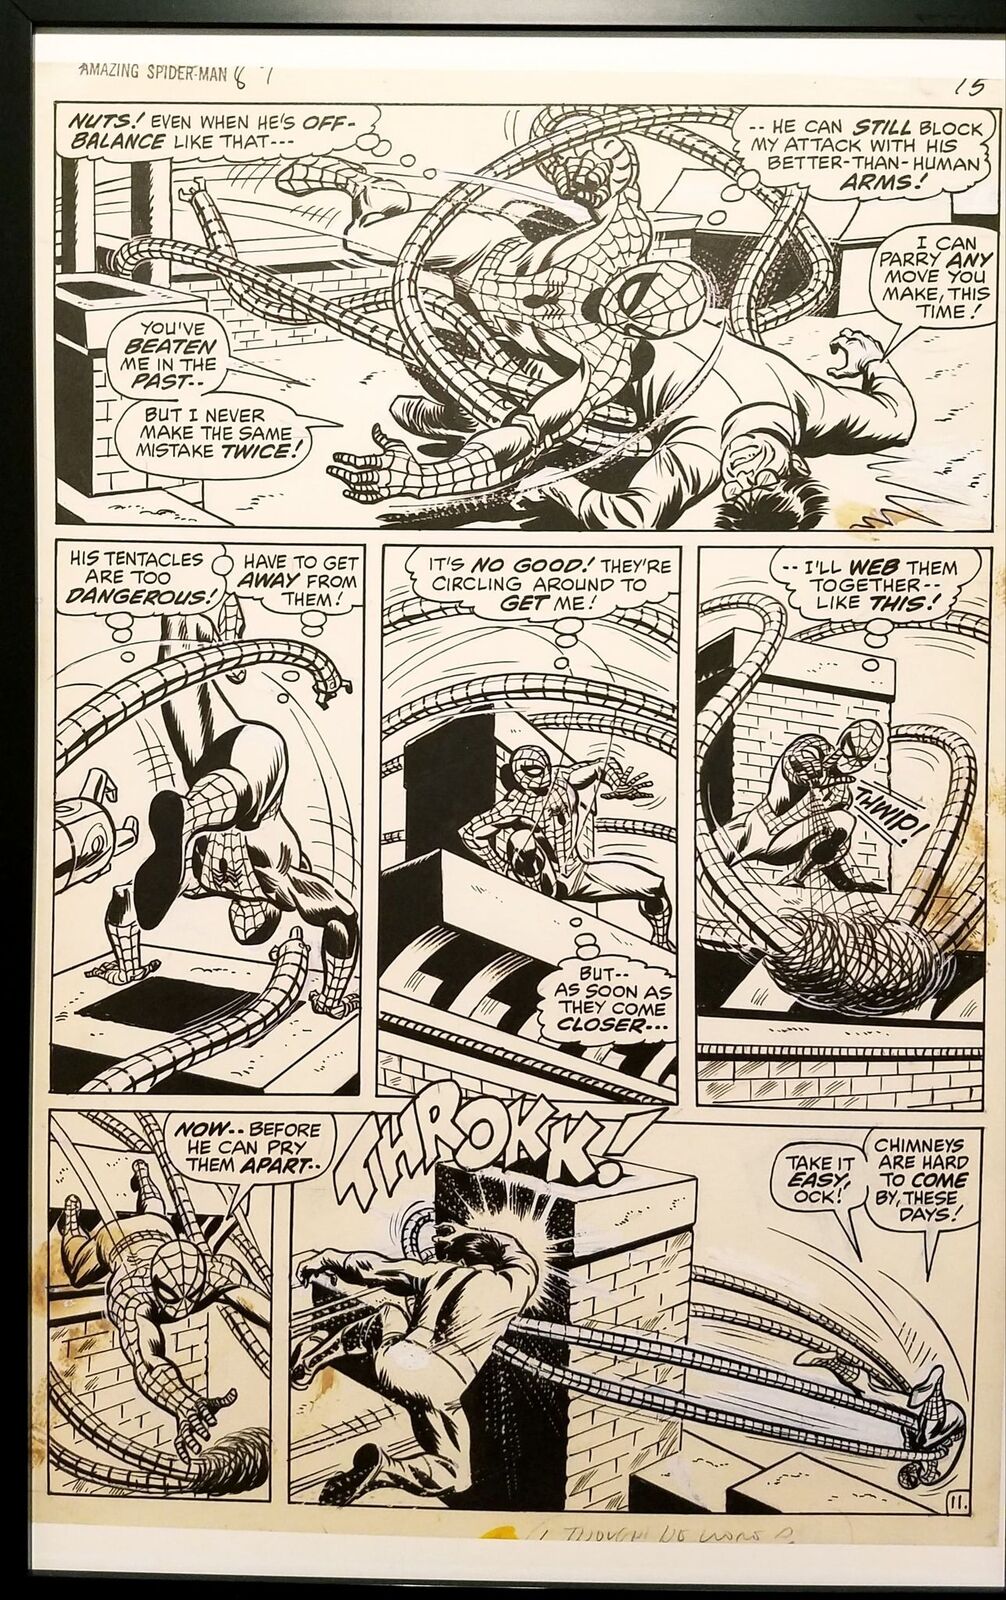 Amazing Spider-Man #89 pg. 18 Gil Kane 11x17 FRAMED Original Art Poster Marvel C